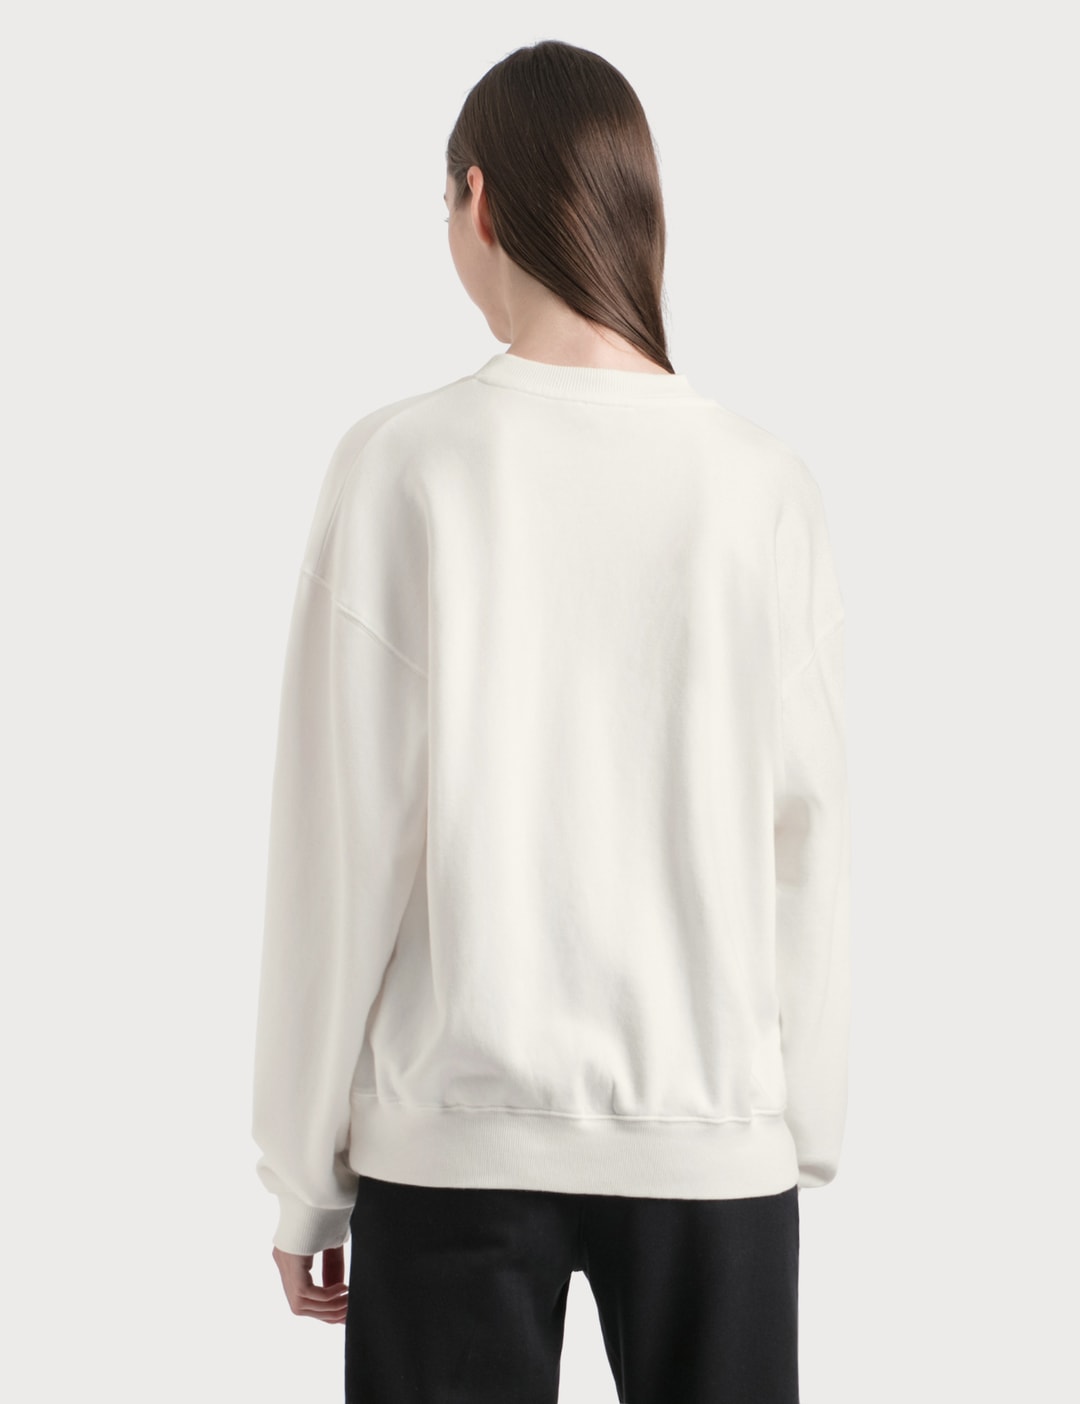 Fiorucci - Bunny Sweatshirt | HBX - Globally Curated Fashion and ...